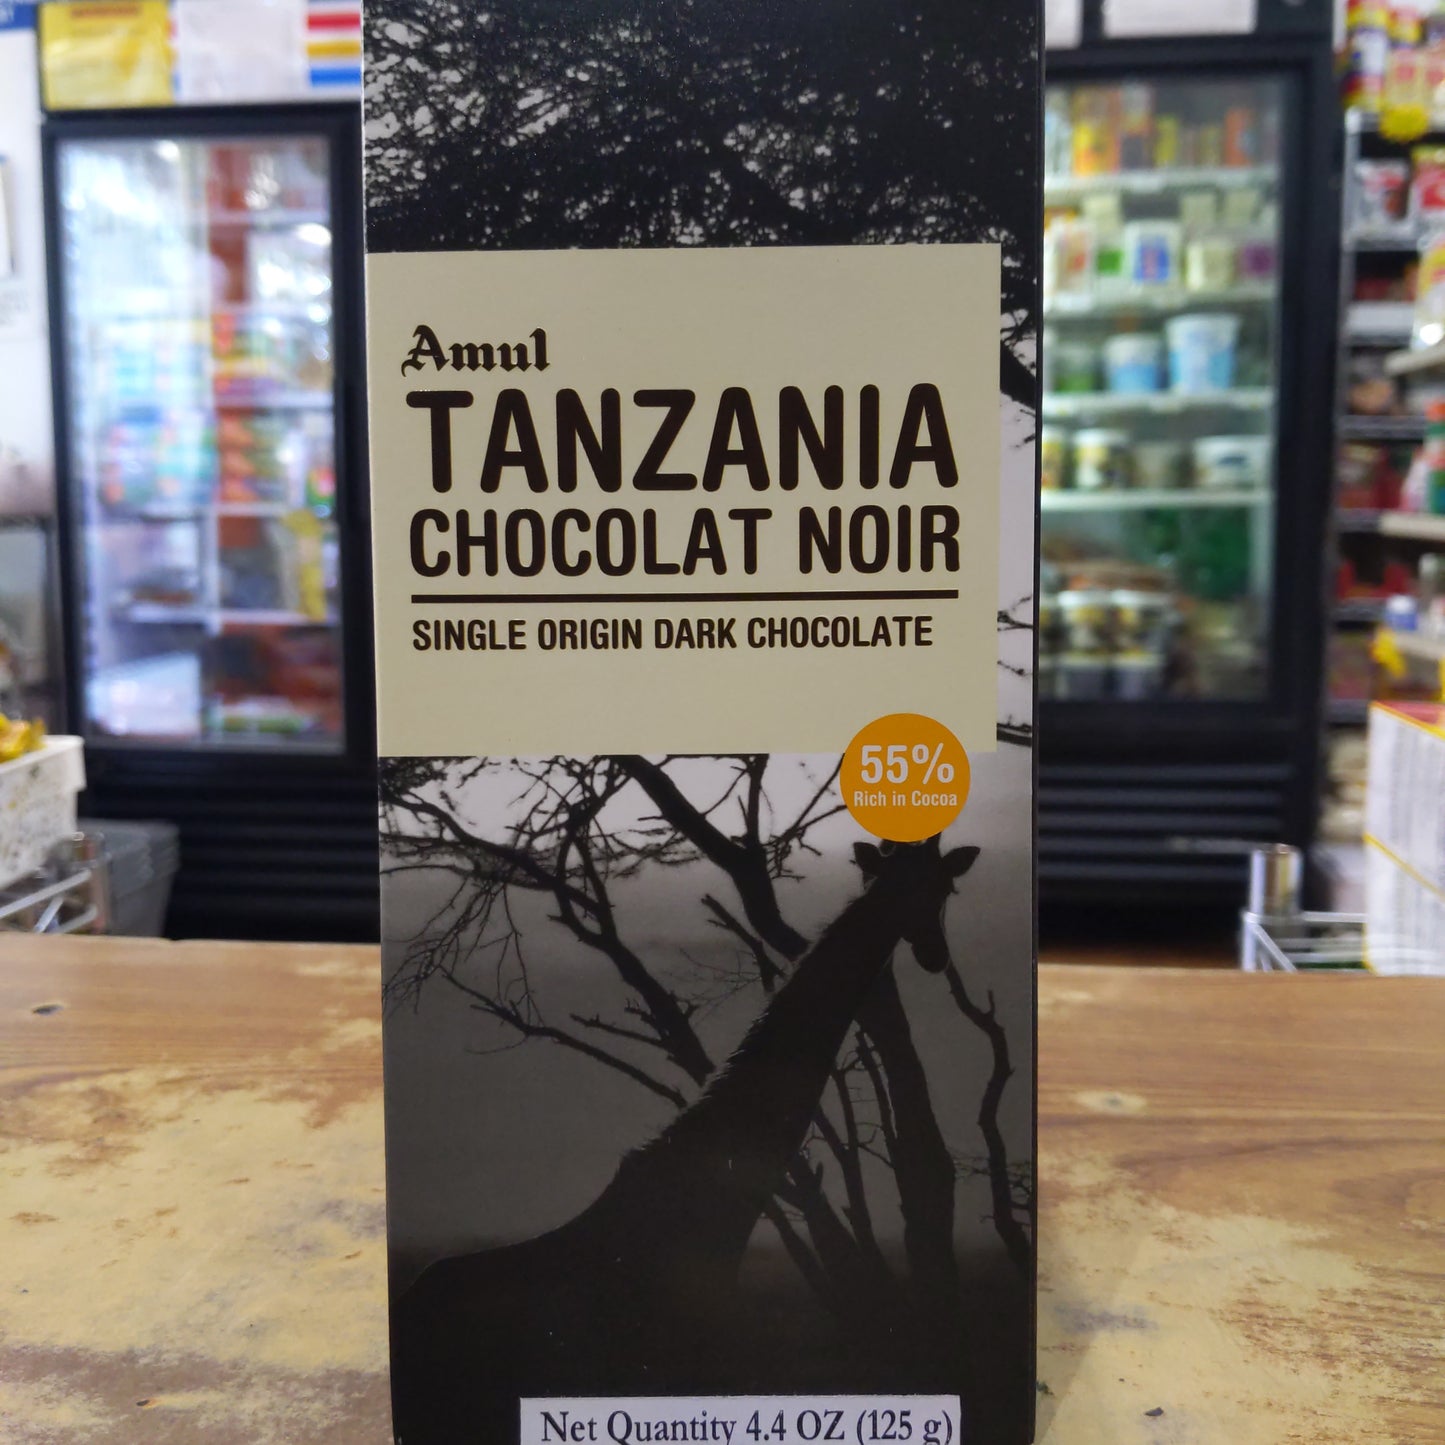 Amul Dark Chocolate Tanzania